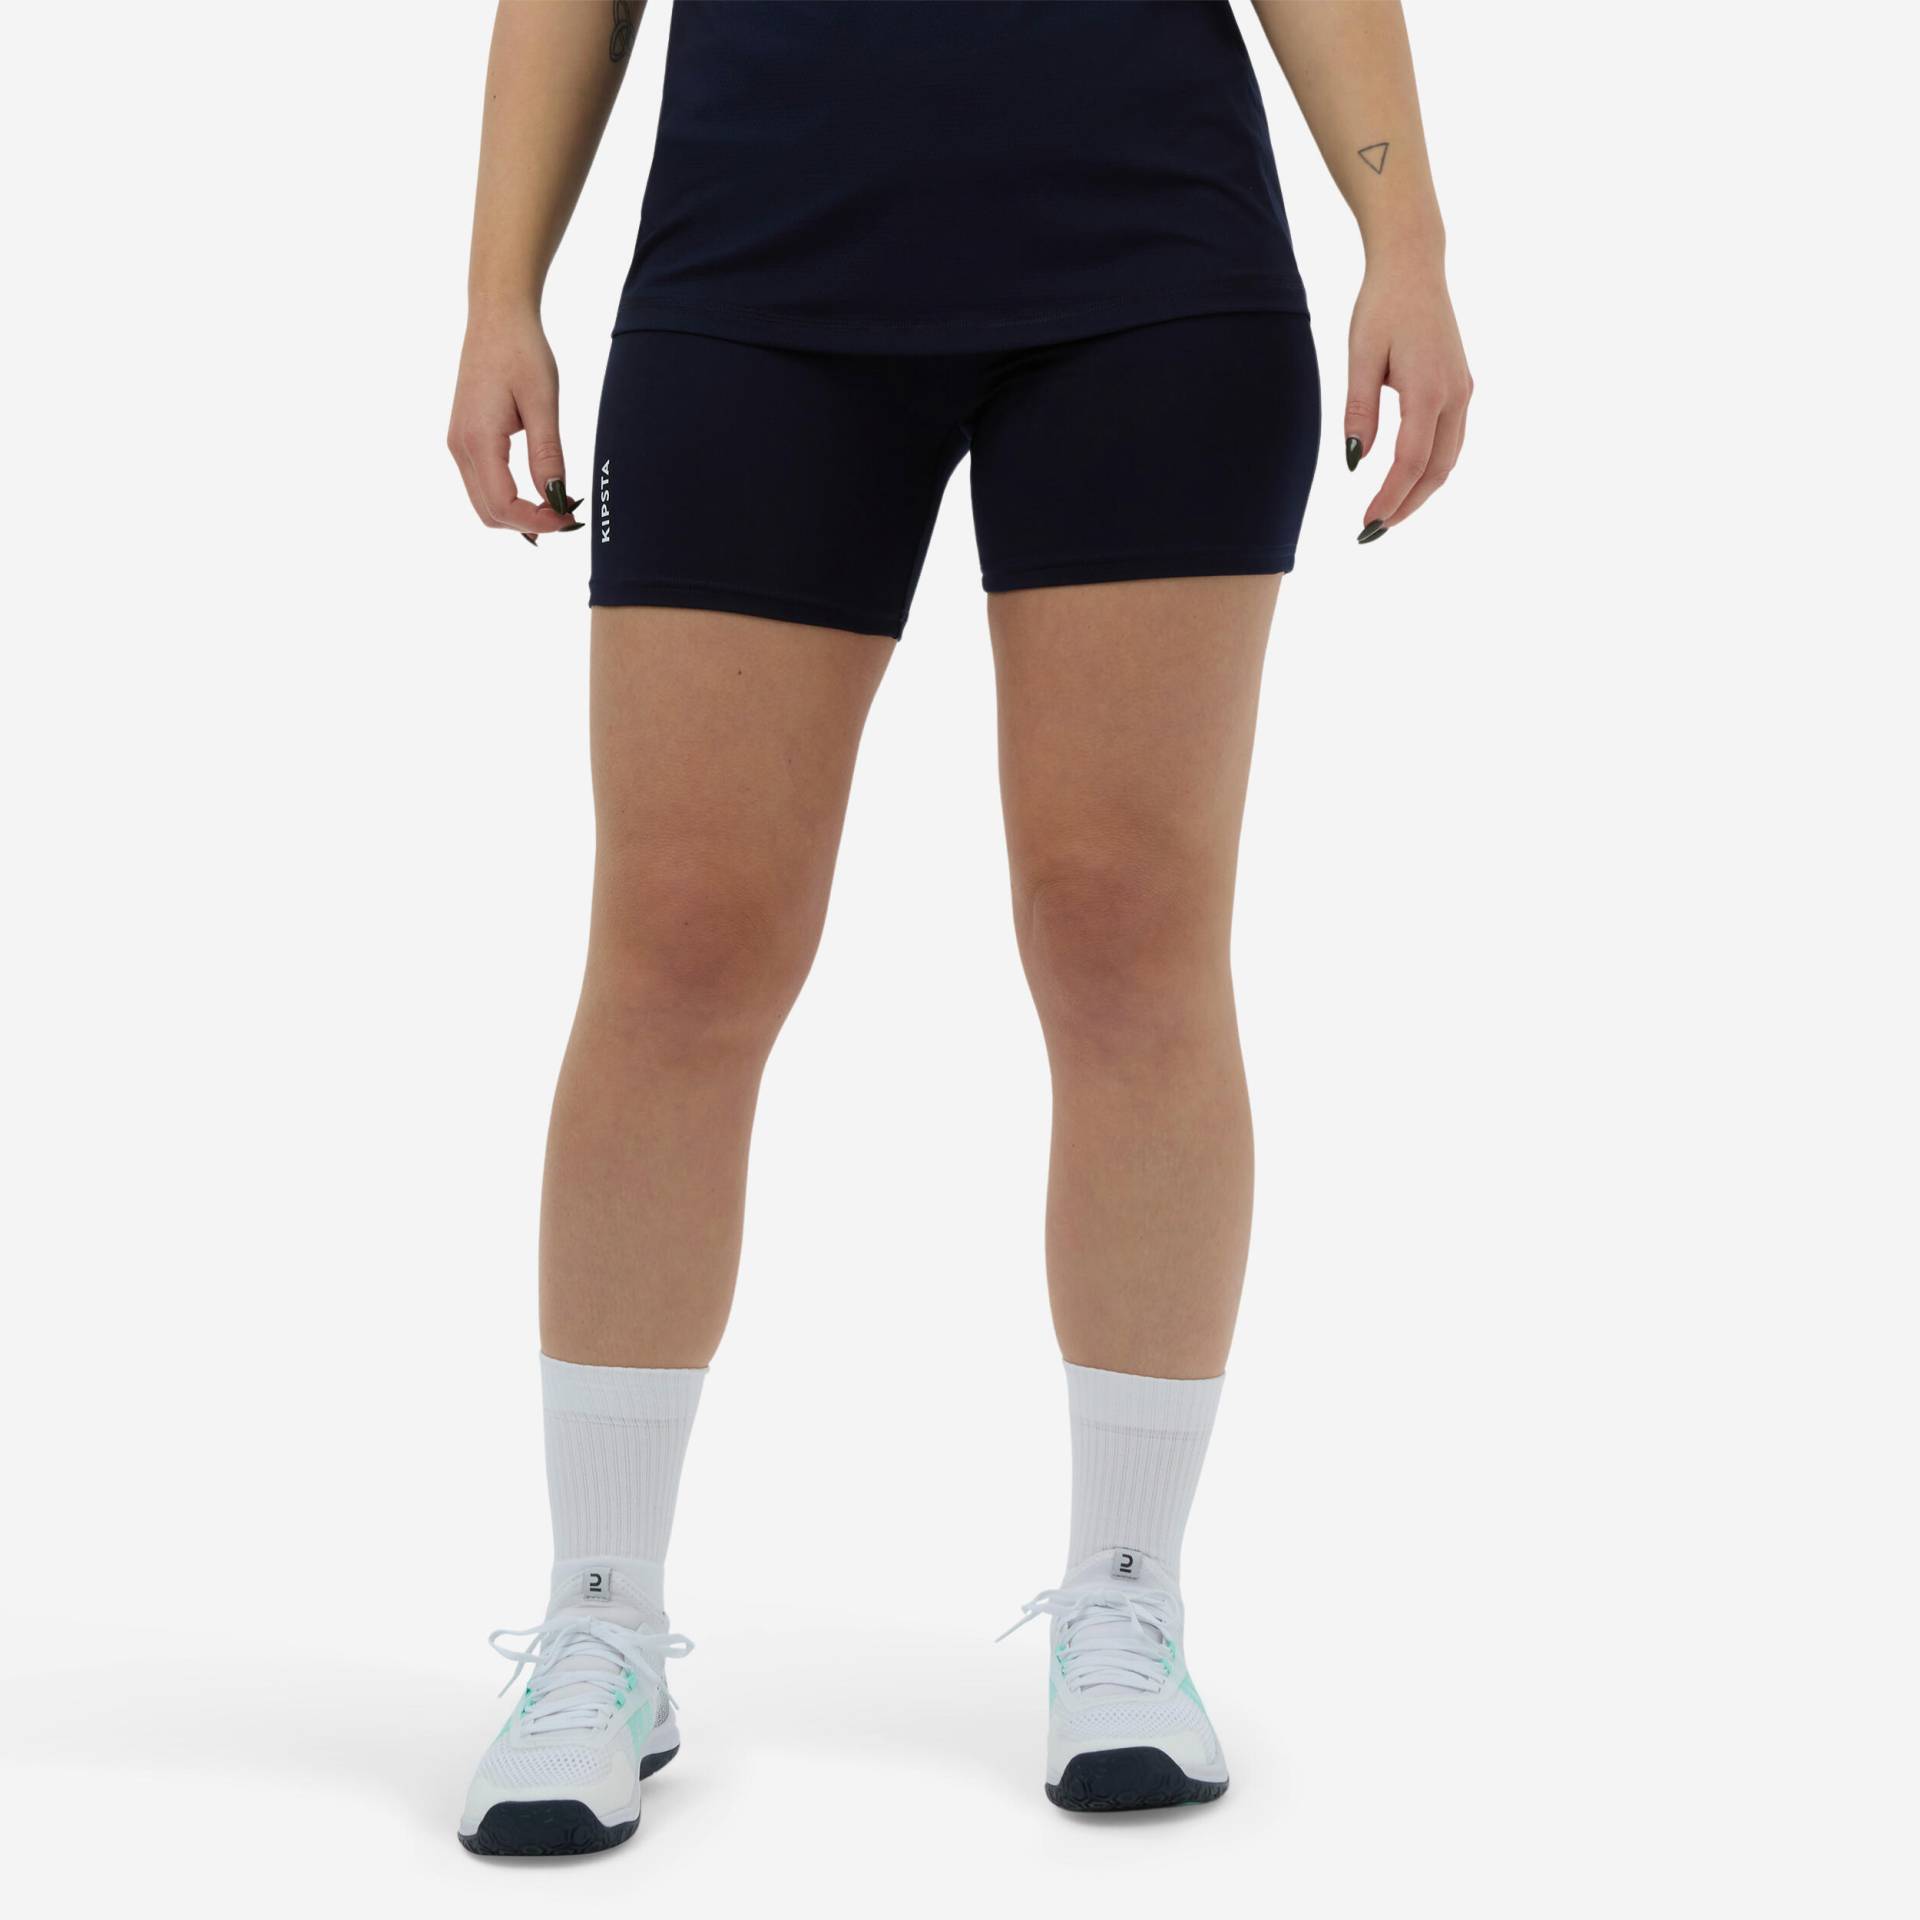 Damen Volleyball Shorts - VSH500 navy von ALLSIX